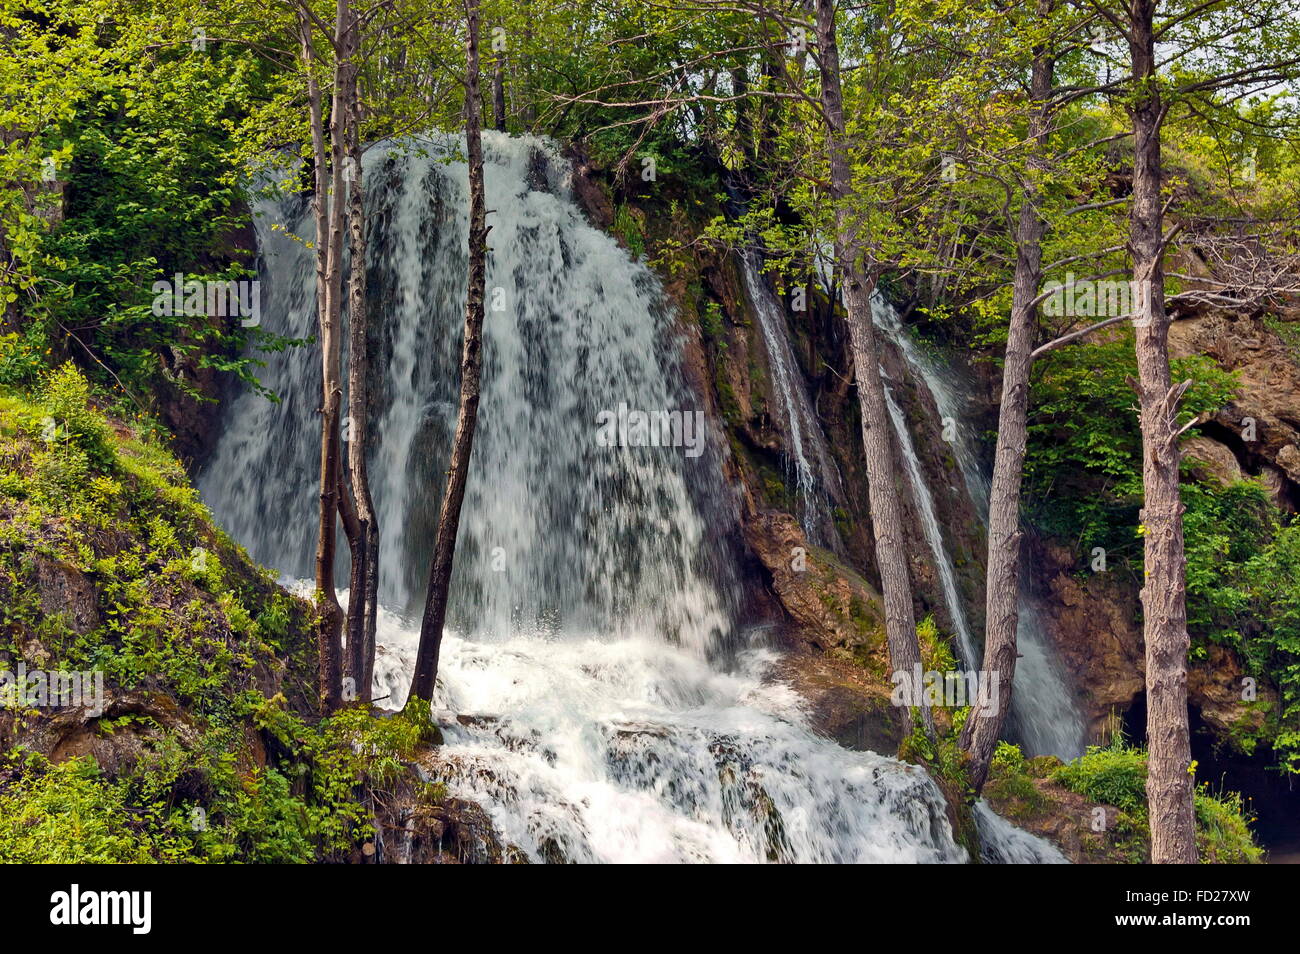 River Bigar in Serbia - waterfall cascade Stock Photo